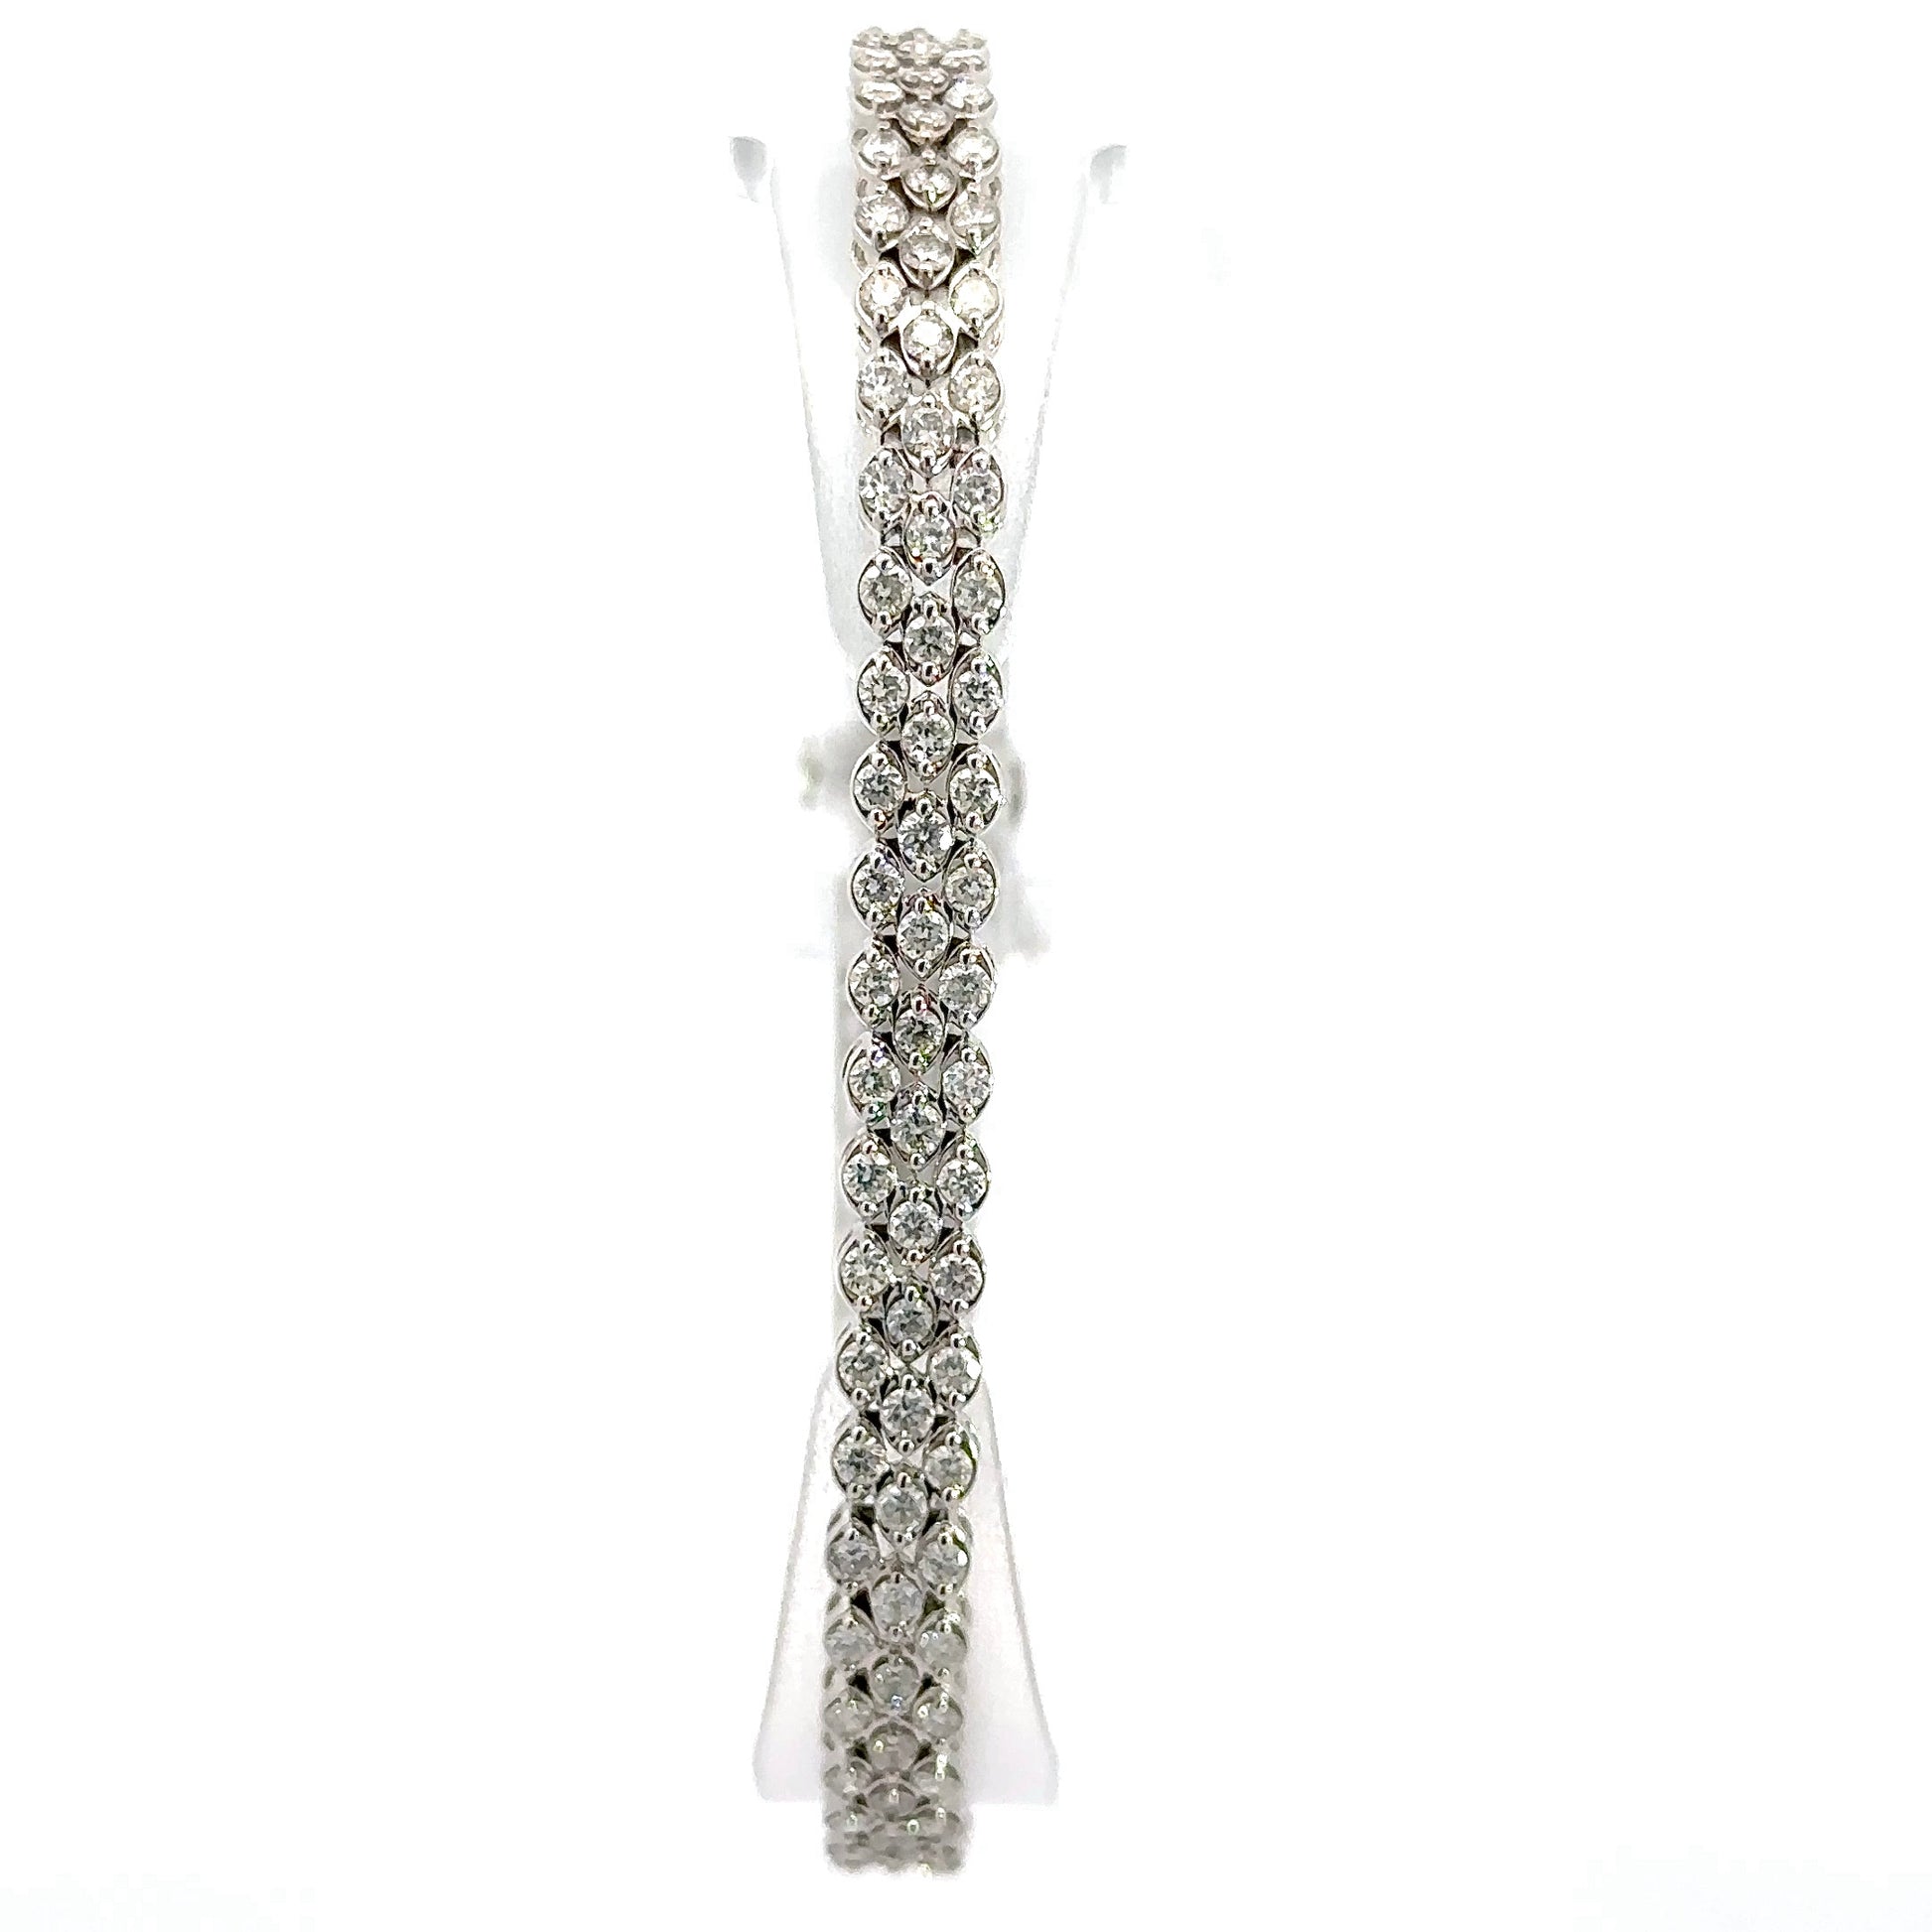 Front of diamond tennis bracelet with 3 rows of round diamonds throughout bracelet